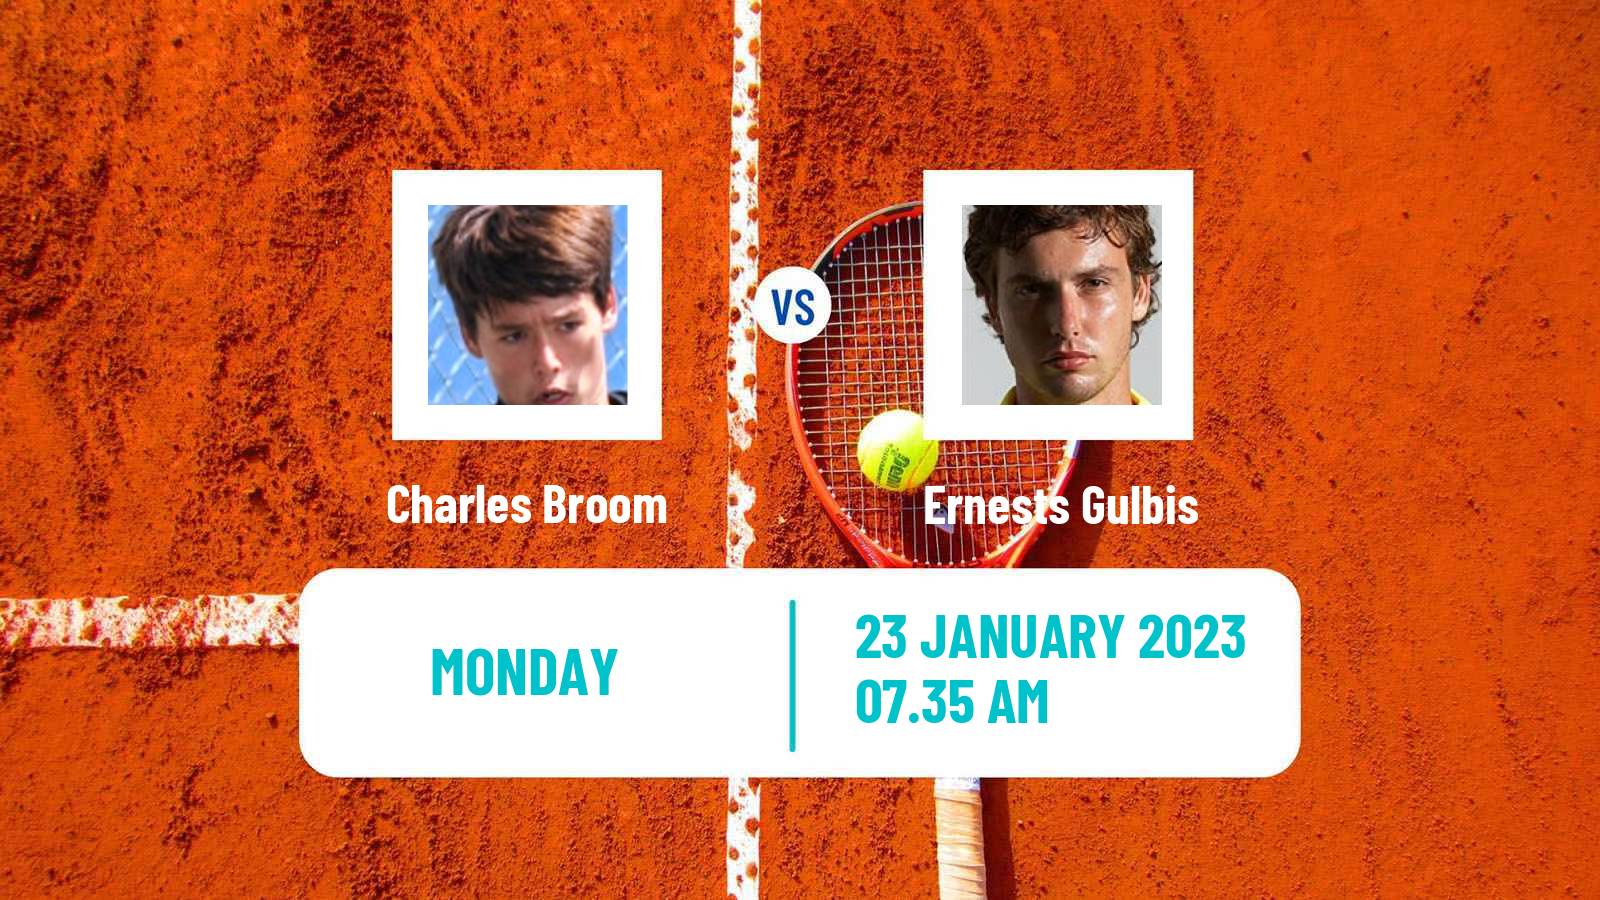 Tennis ATP Challenger Charles Broom - Ernests Gulbis